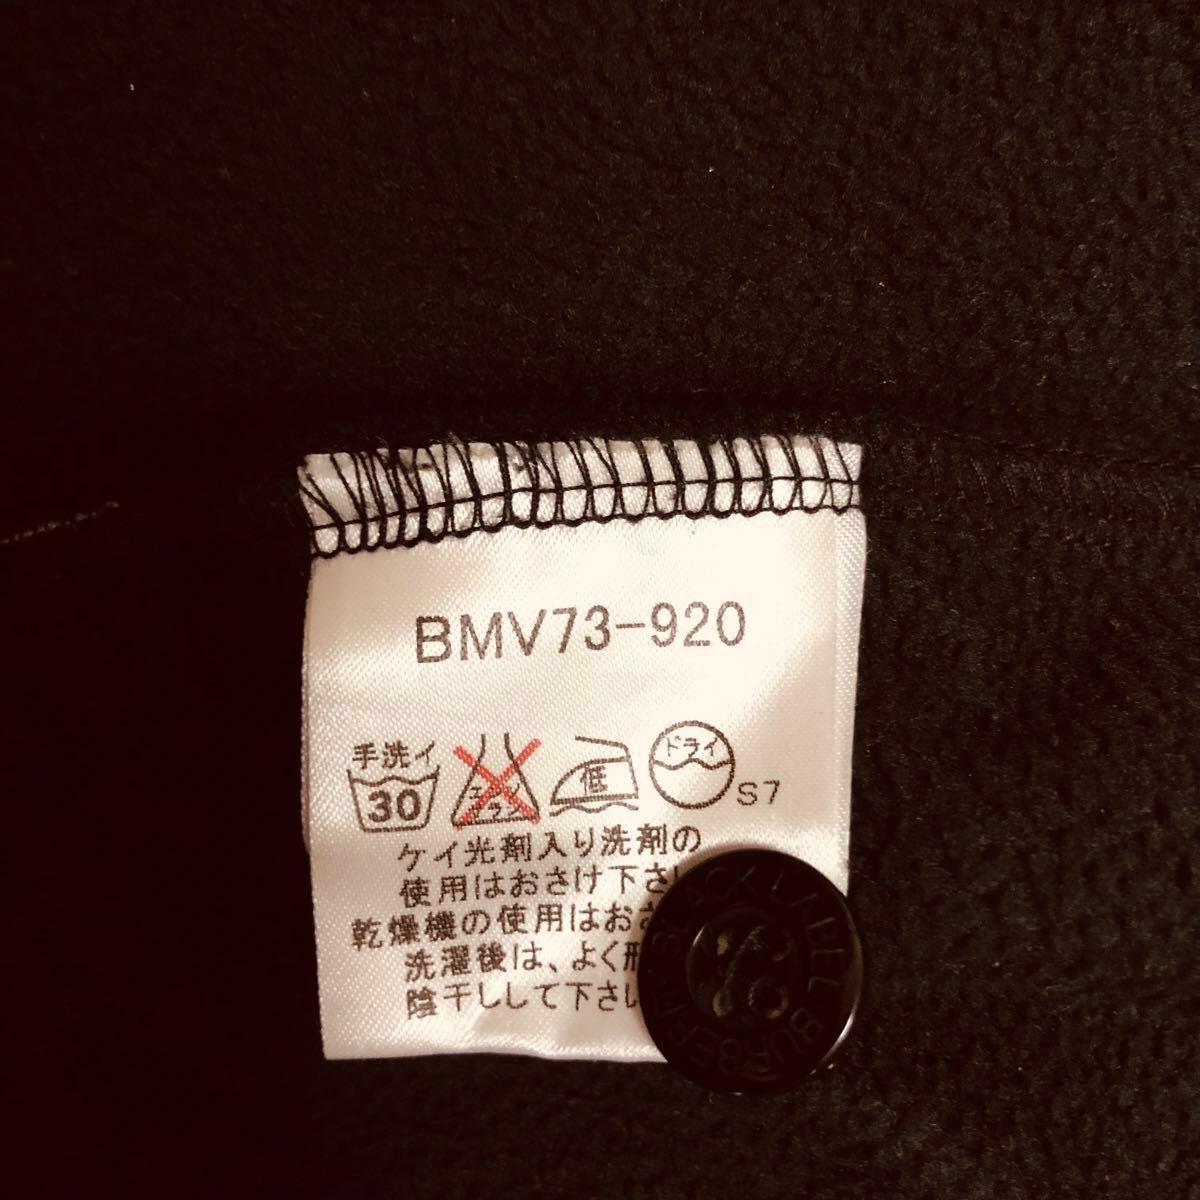 BURBERRY BLACK LABEL バーバリーブラックレーベル フリースジャケット サイズ3 BMV73-920